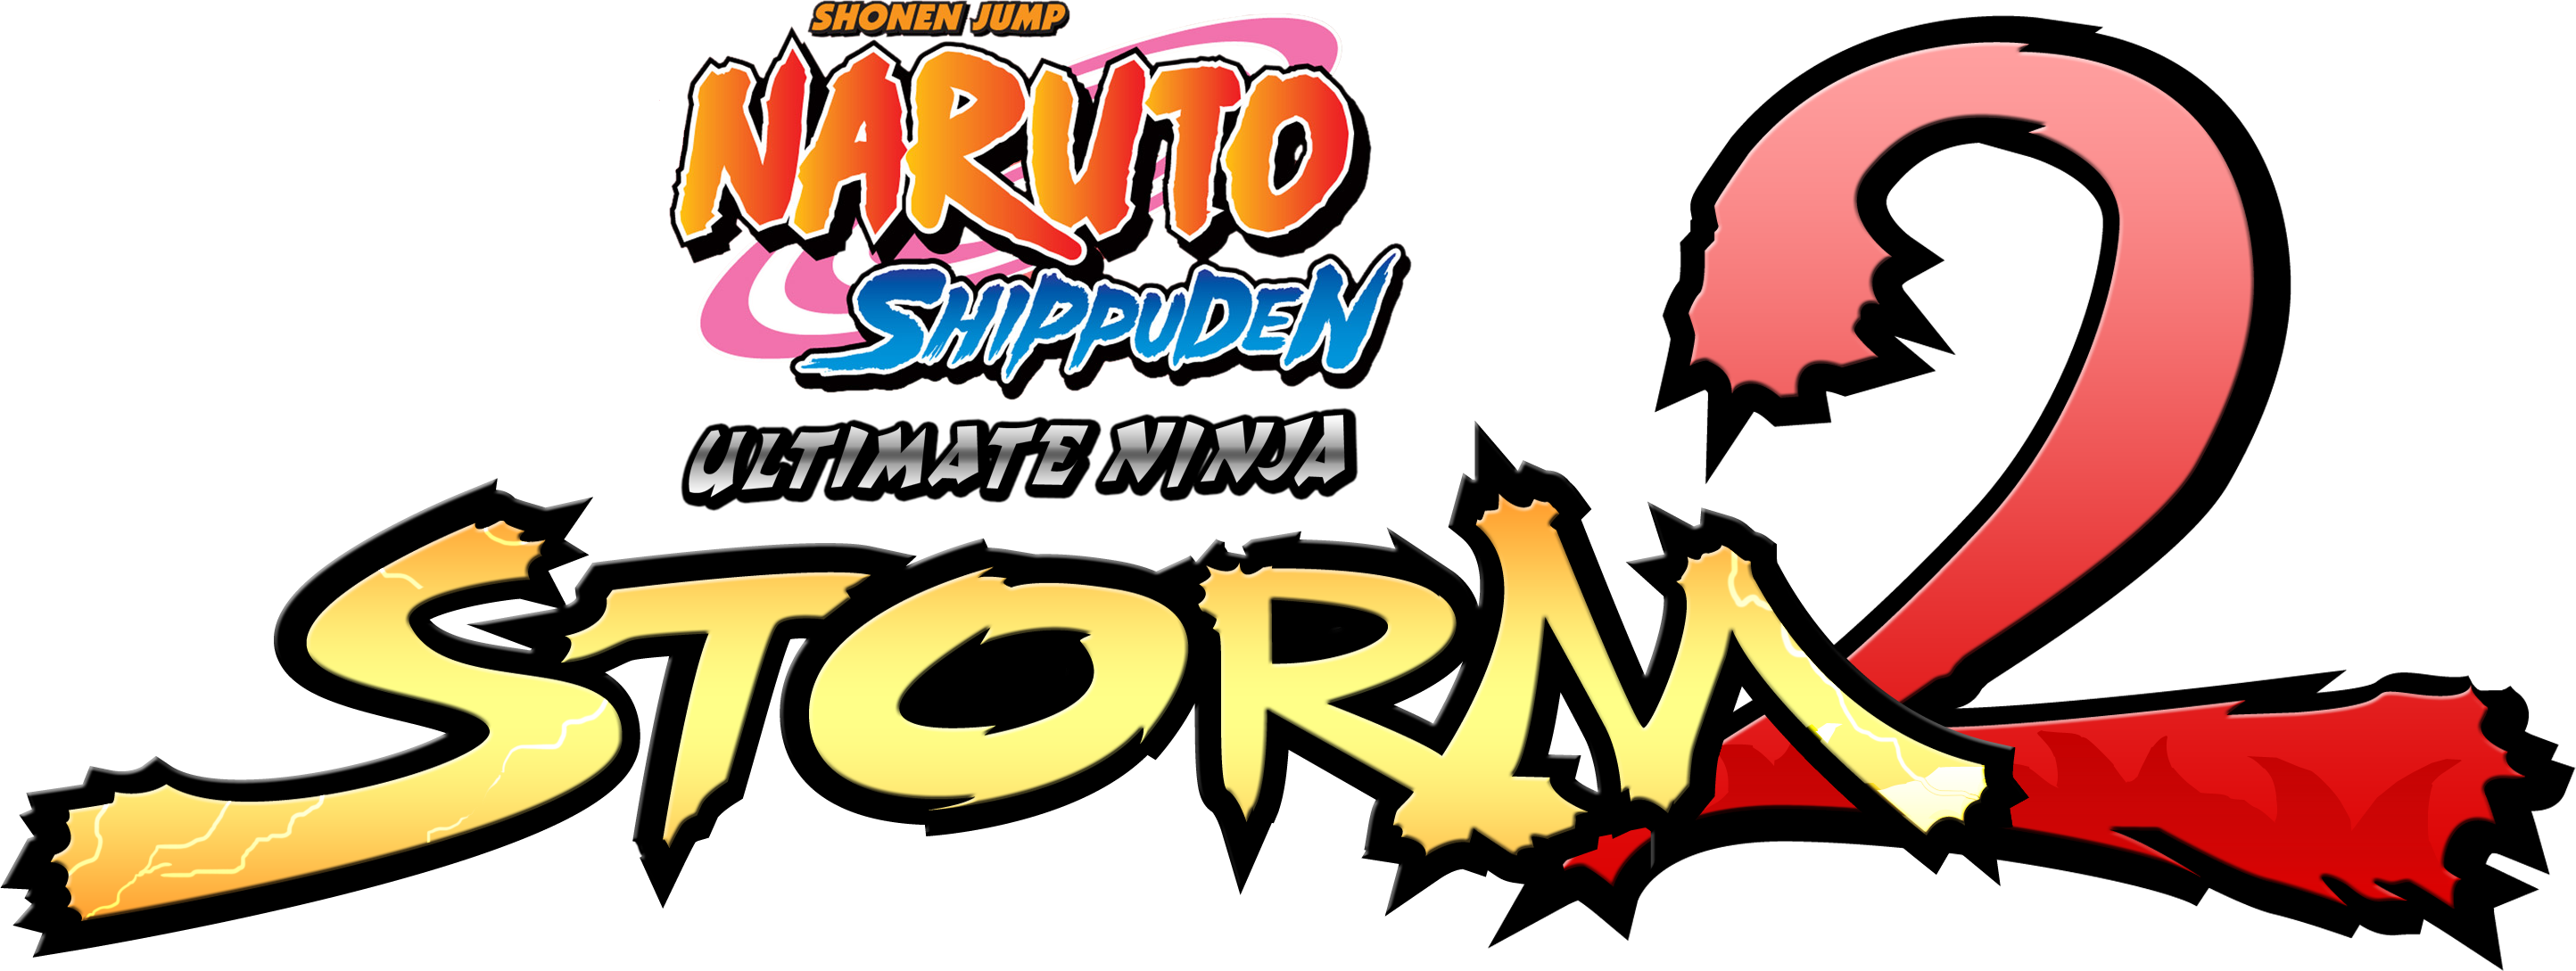 Naruto Shippuden Ultimate Ninja Storm 2 Steamgriddb